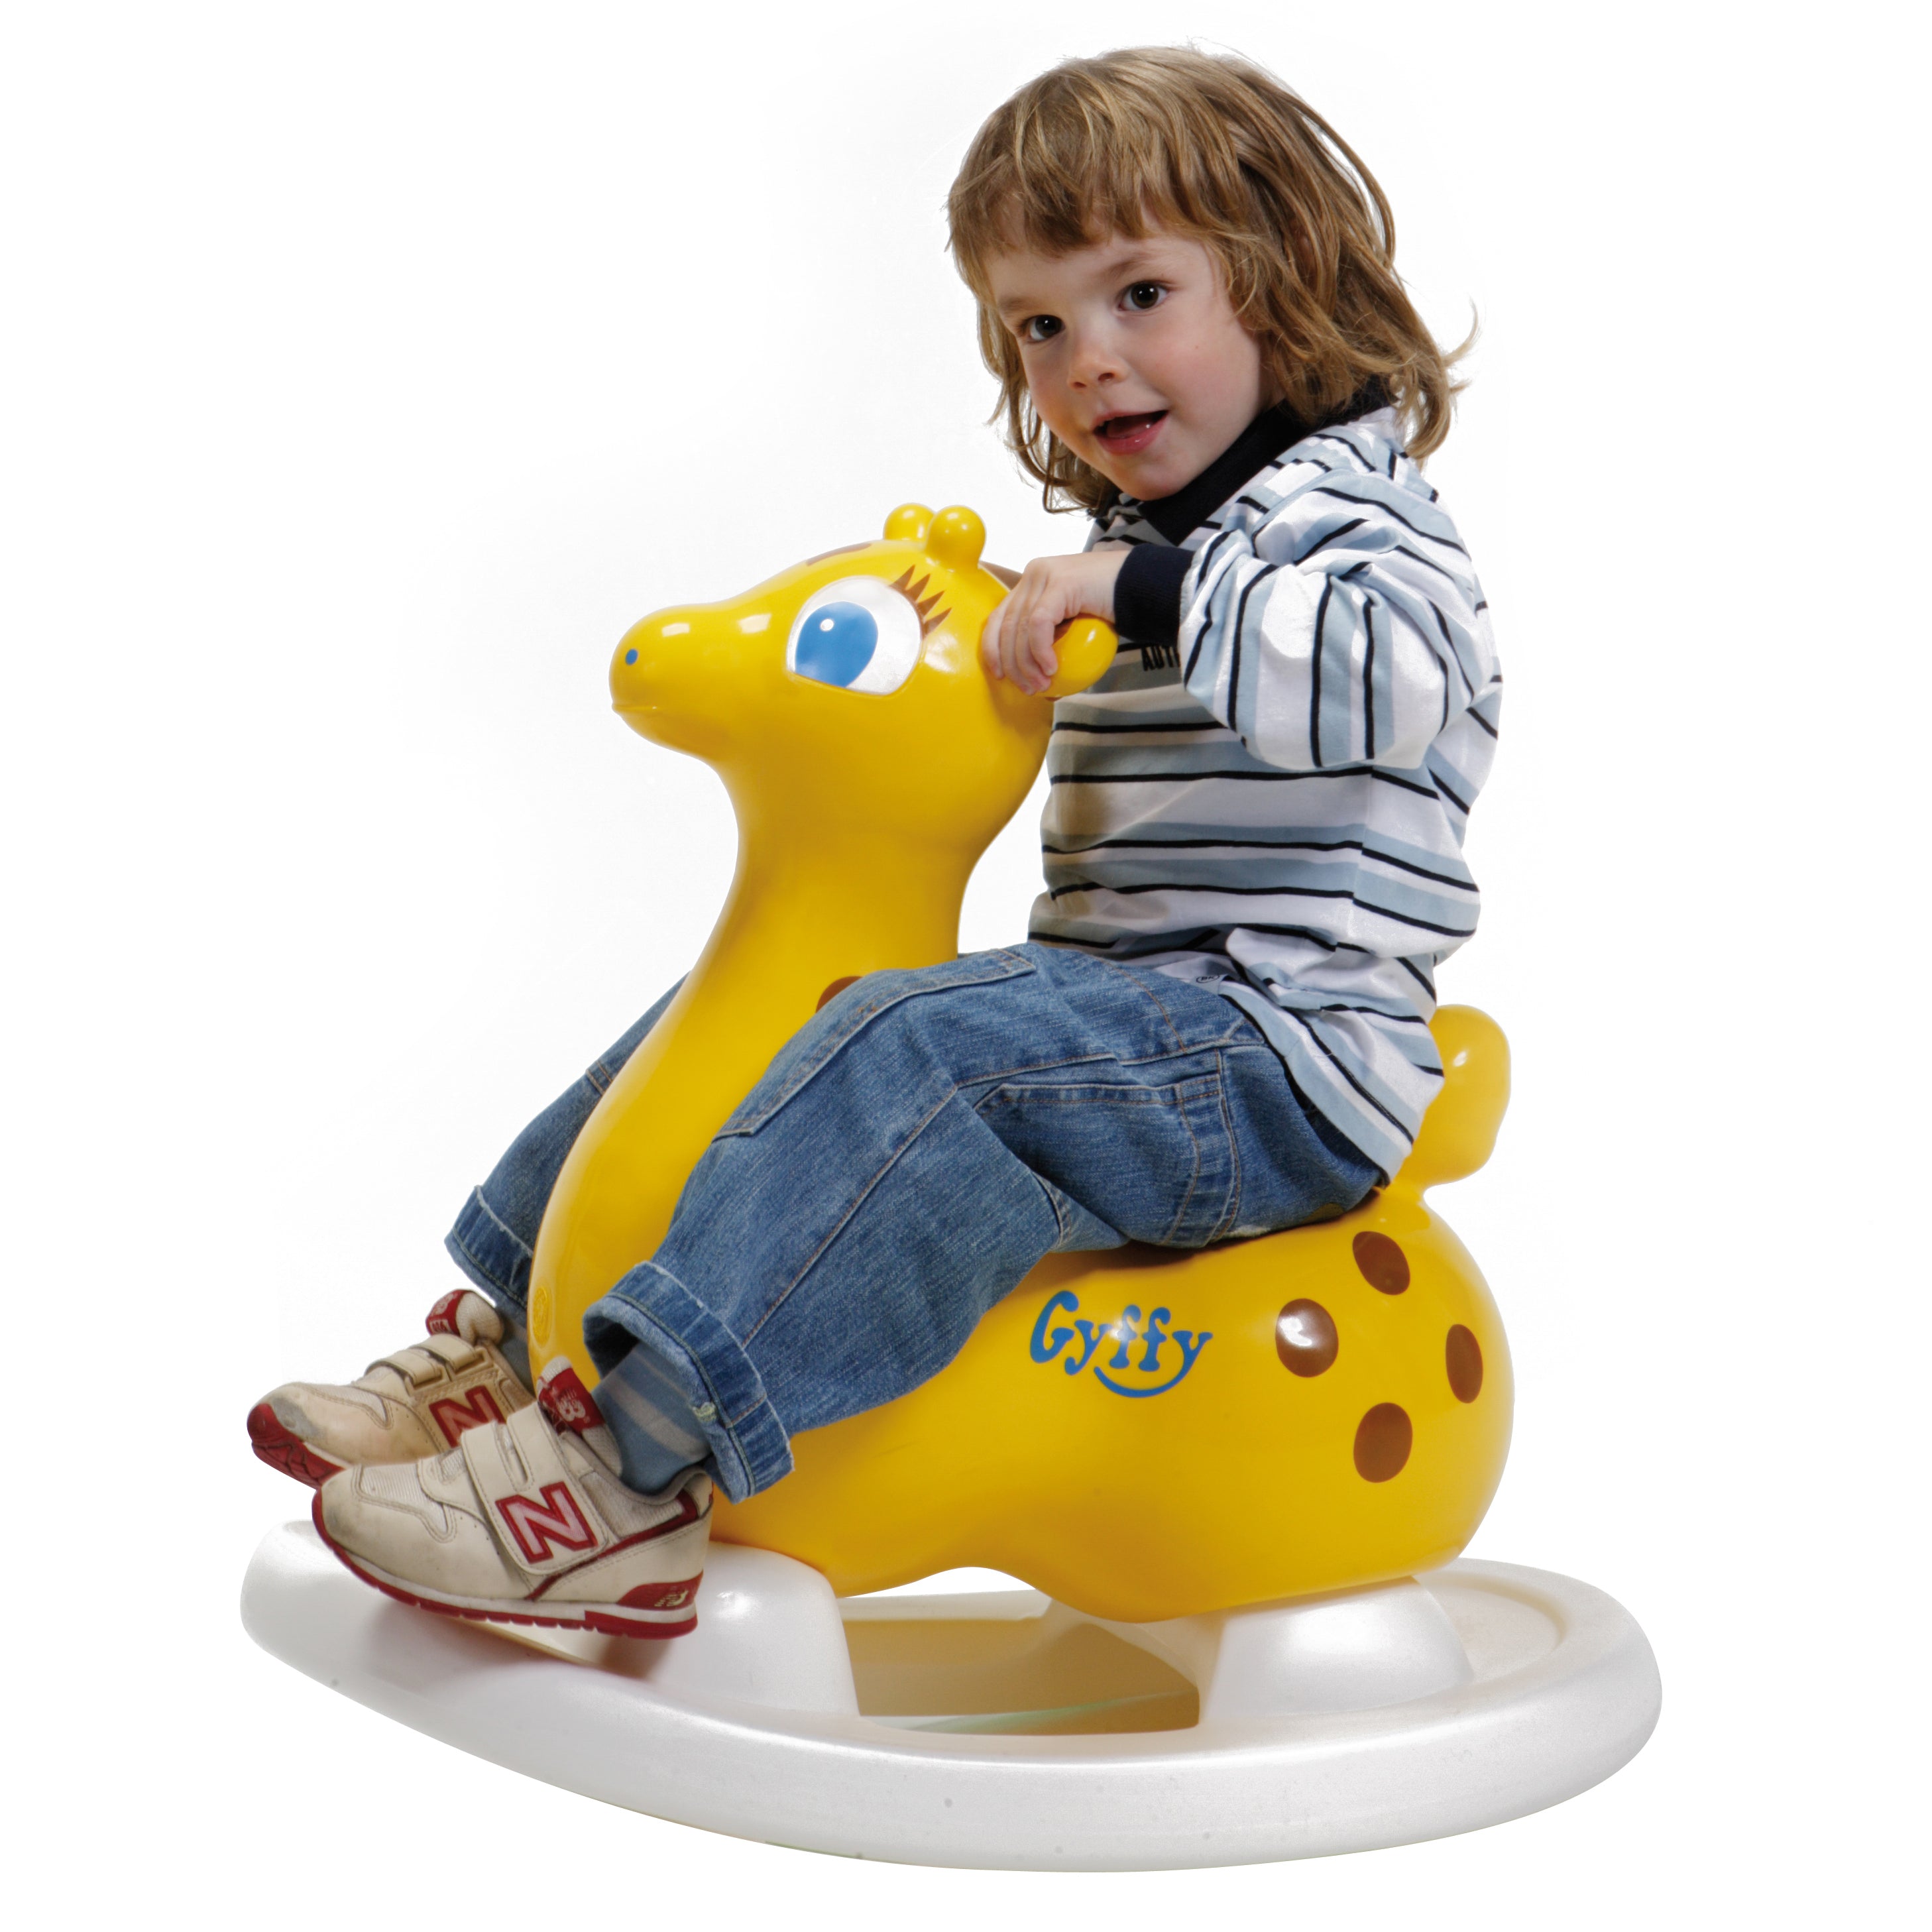 Gyffy The Giraffe Bounce Toy With Rocking Base